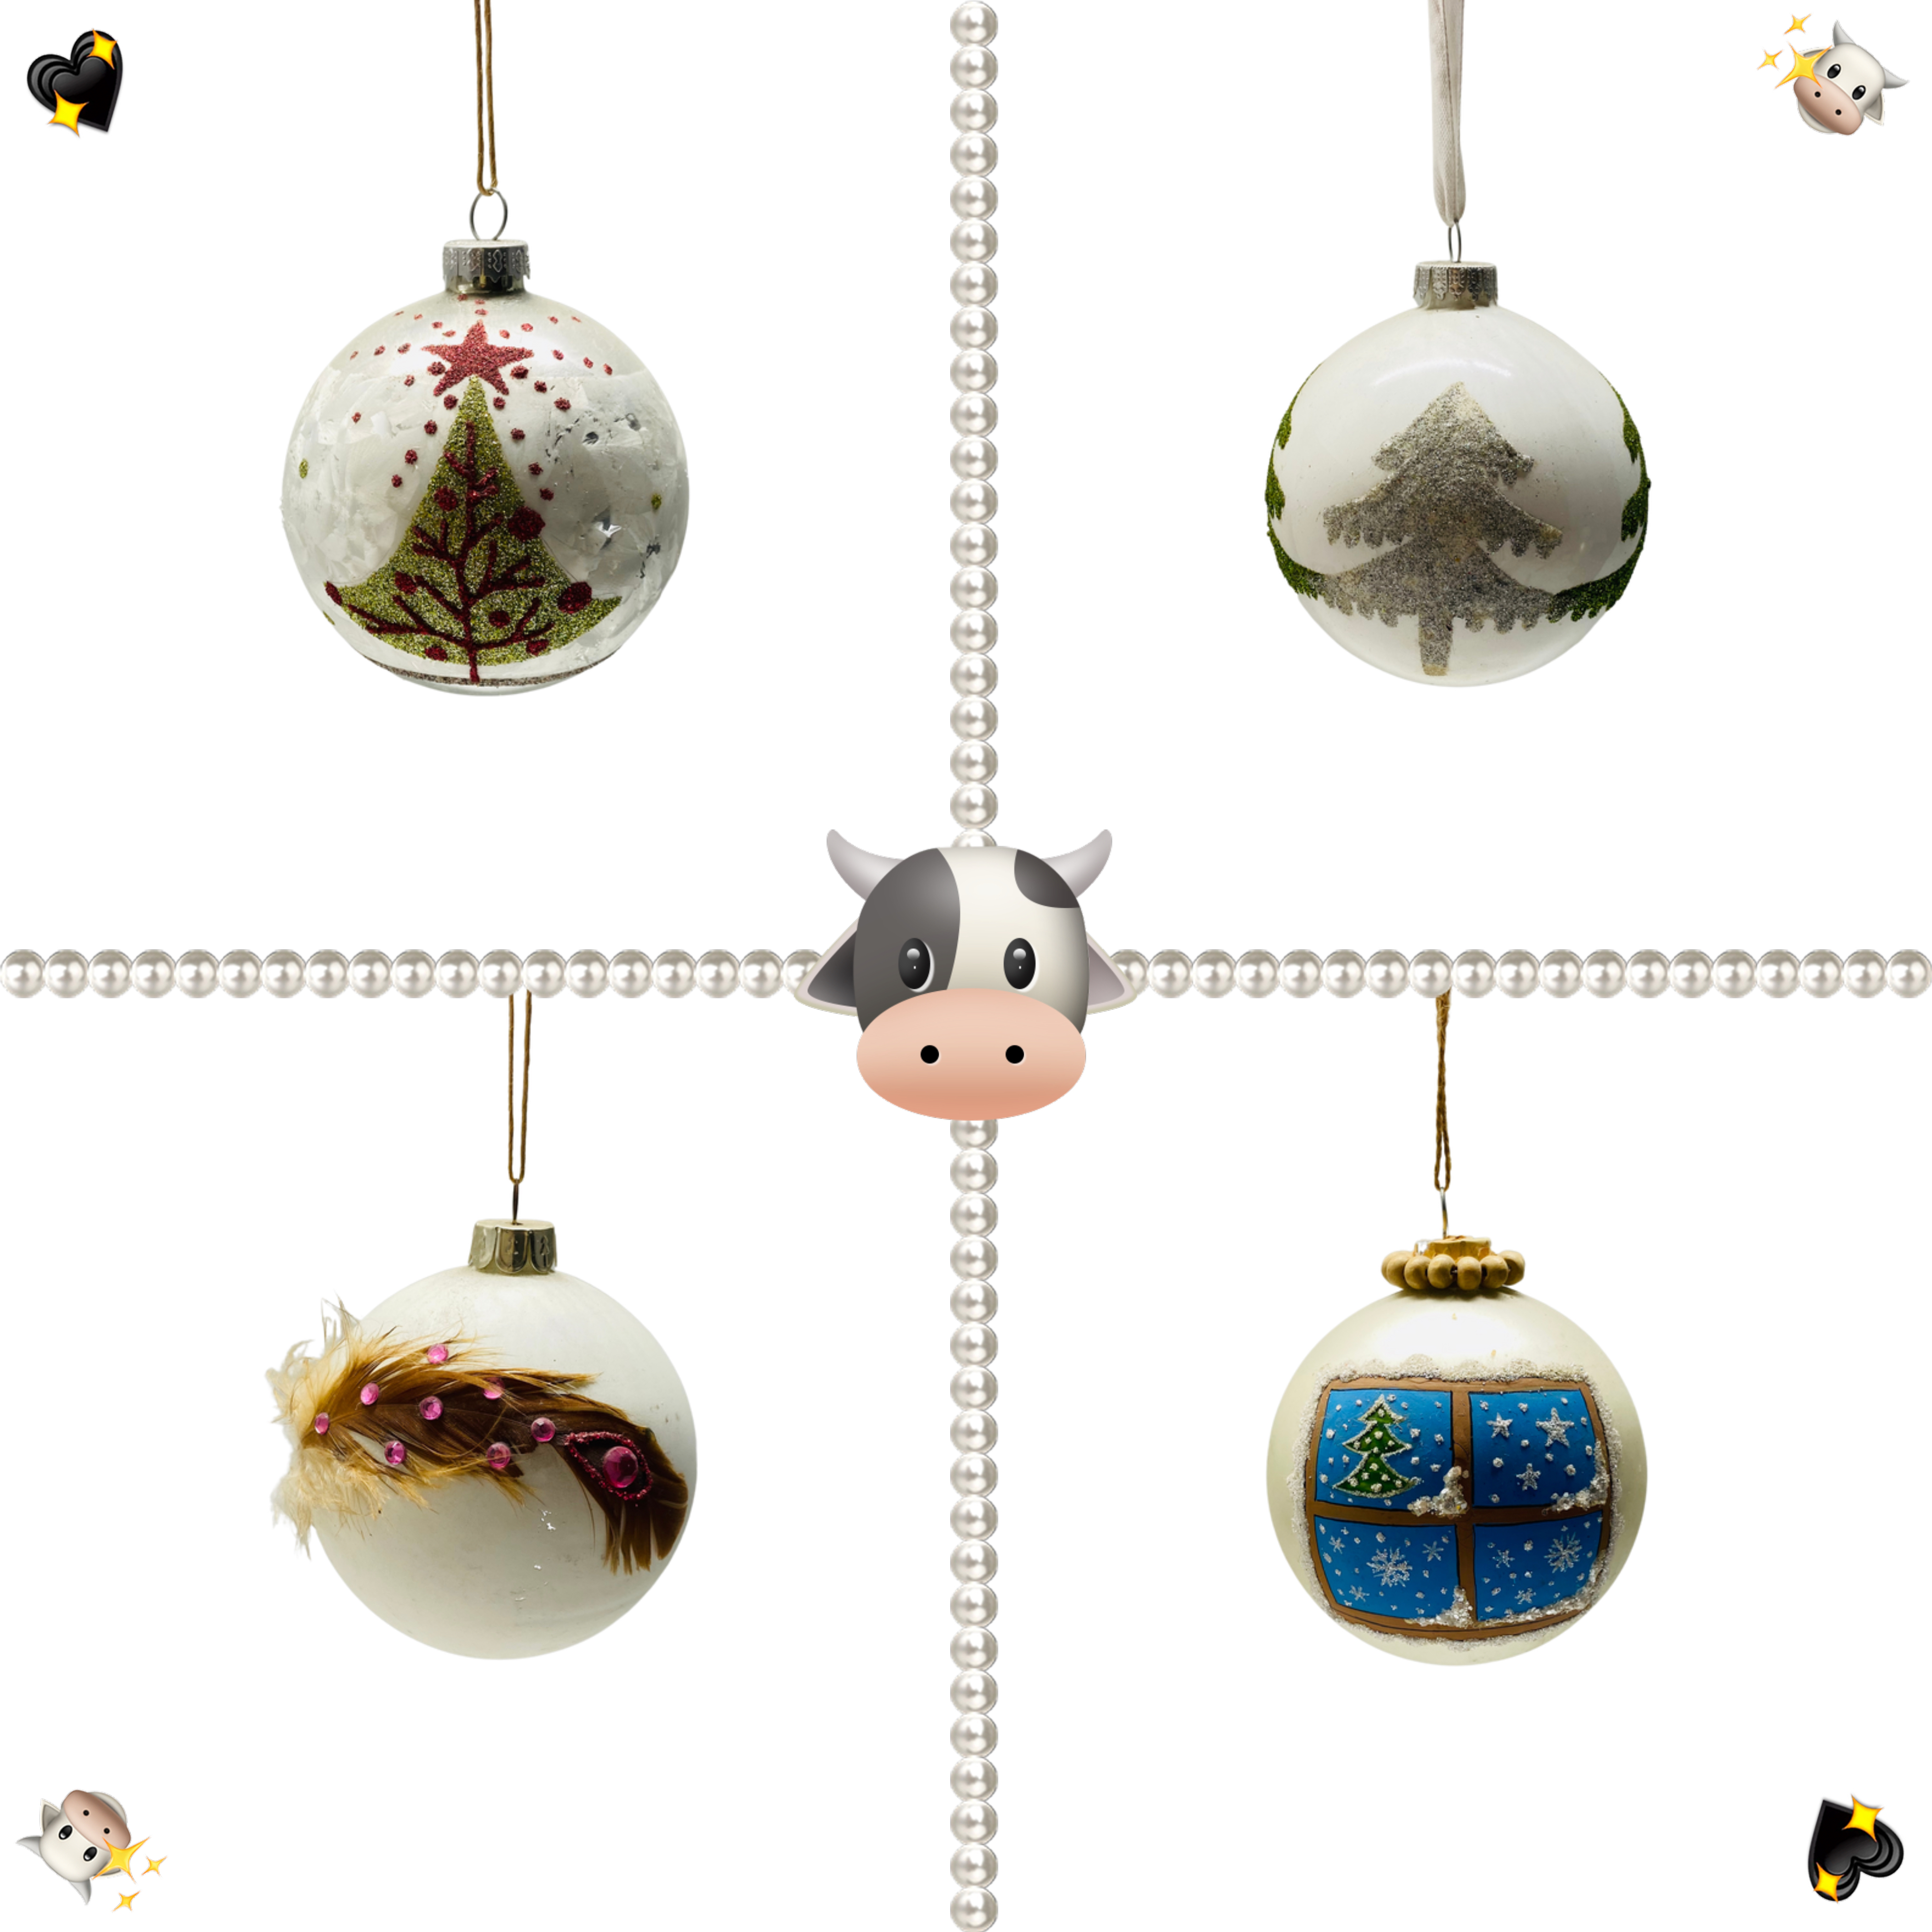  Hanging Holiday Decoration